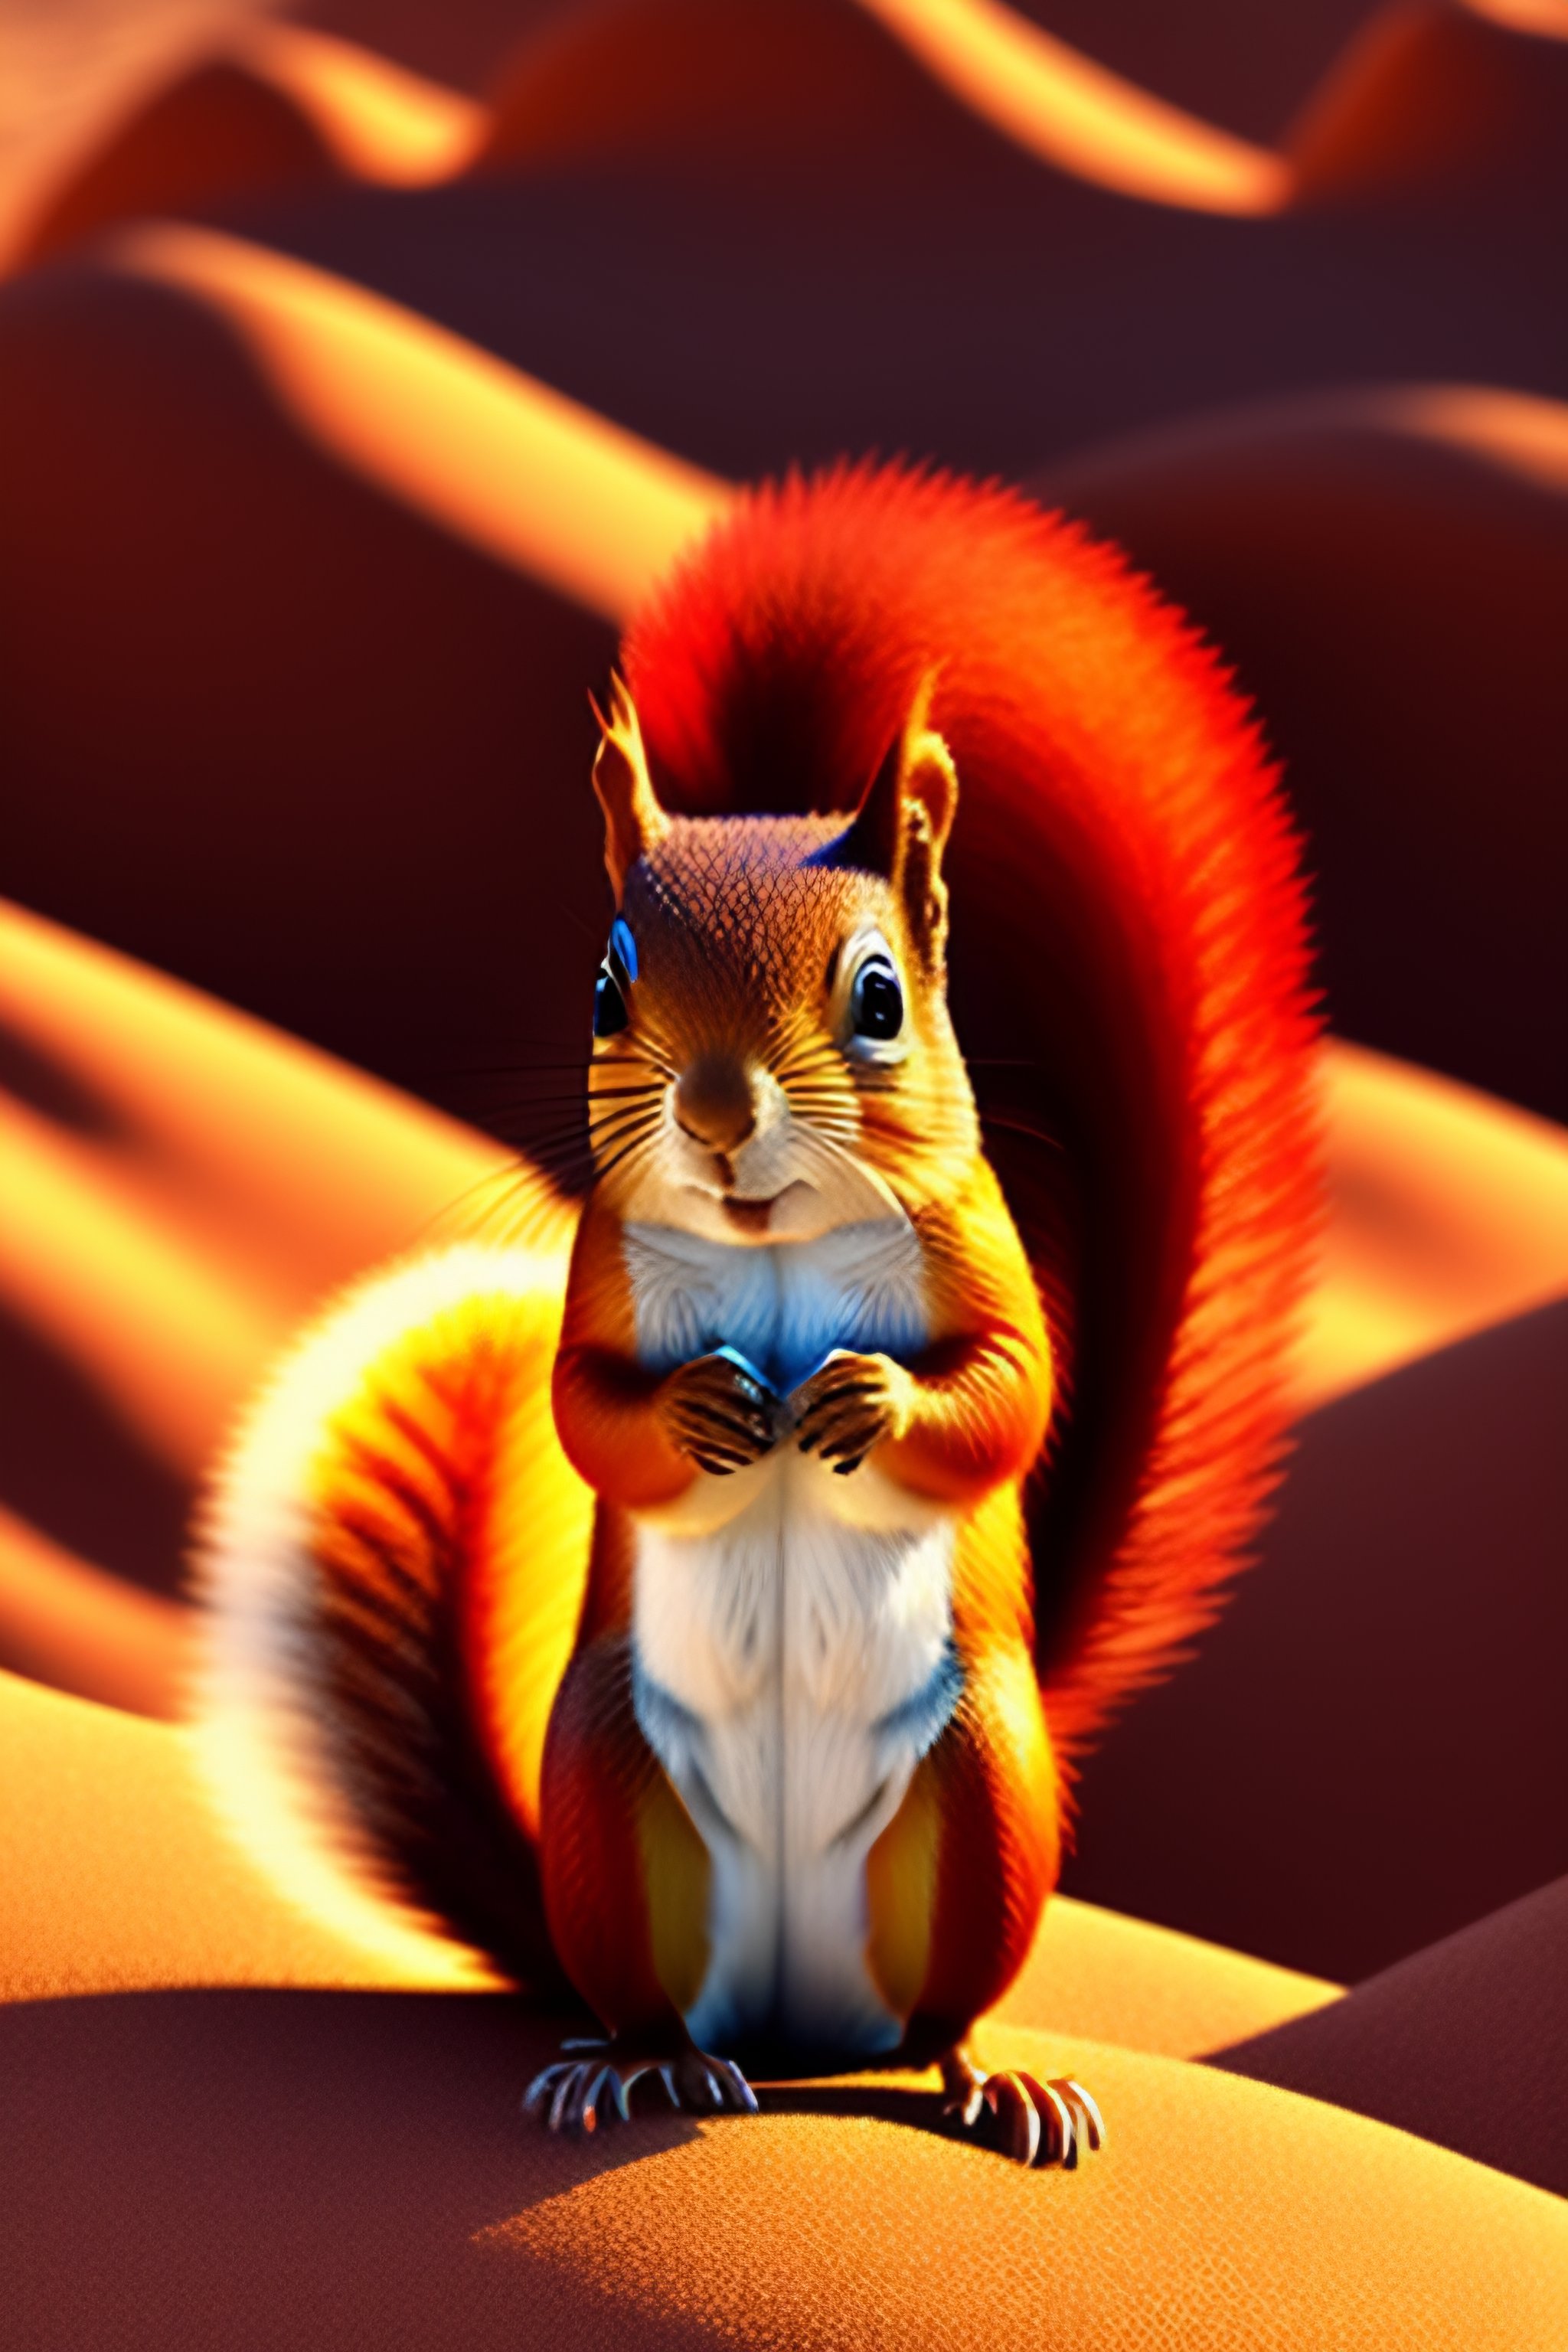 Lexica - Little Red cute squirrel in desert cartoon